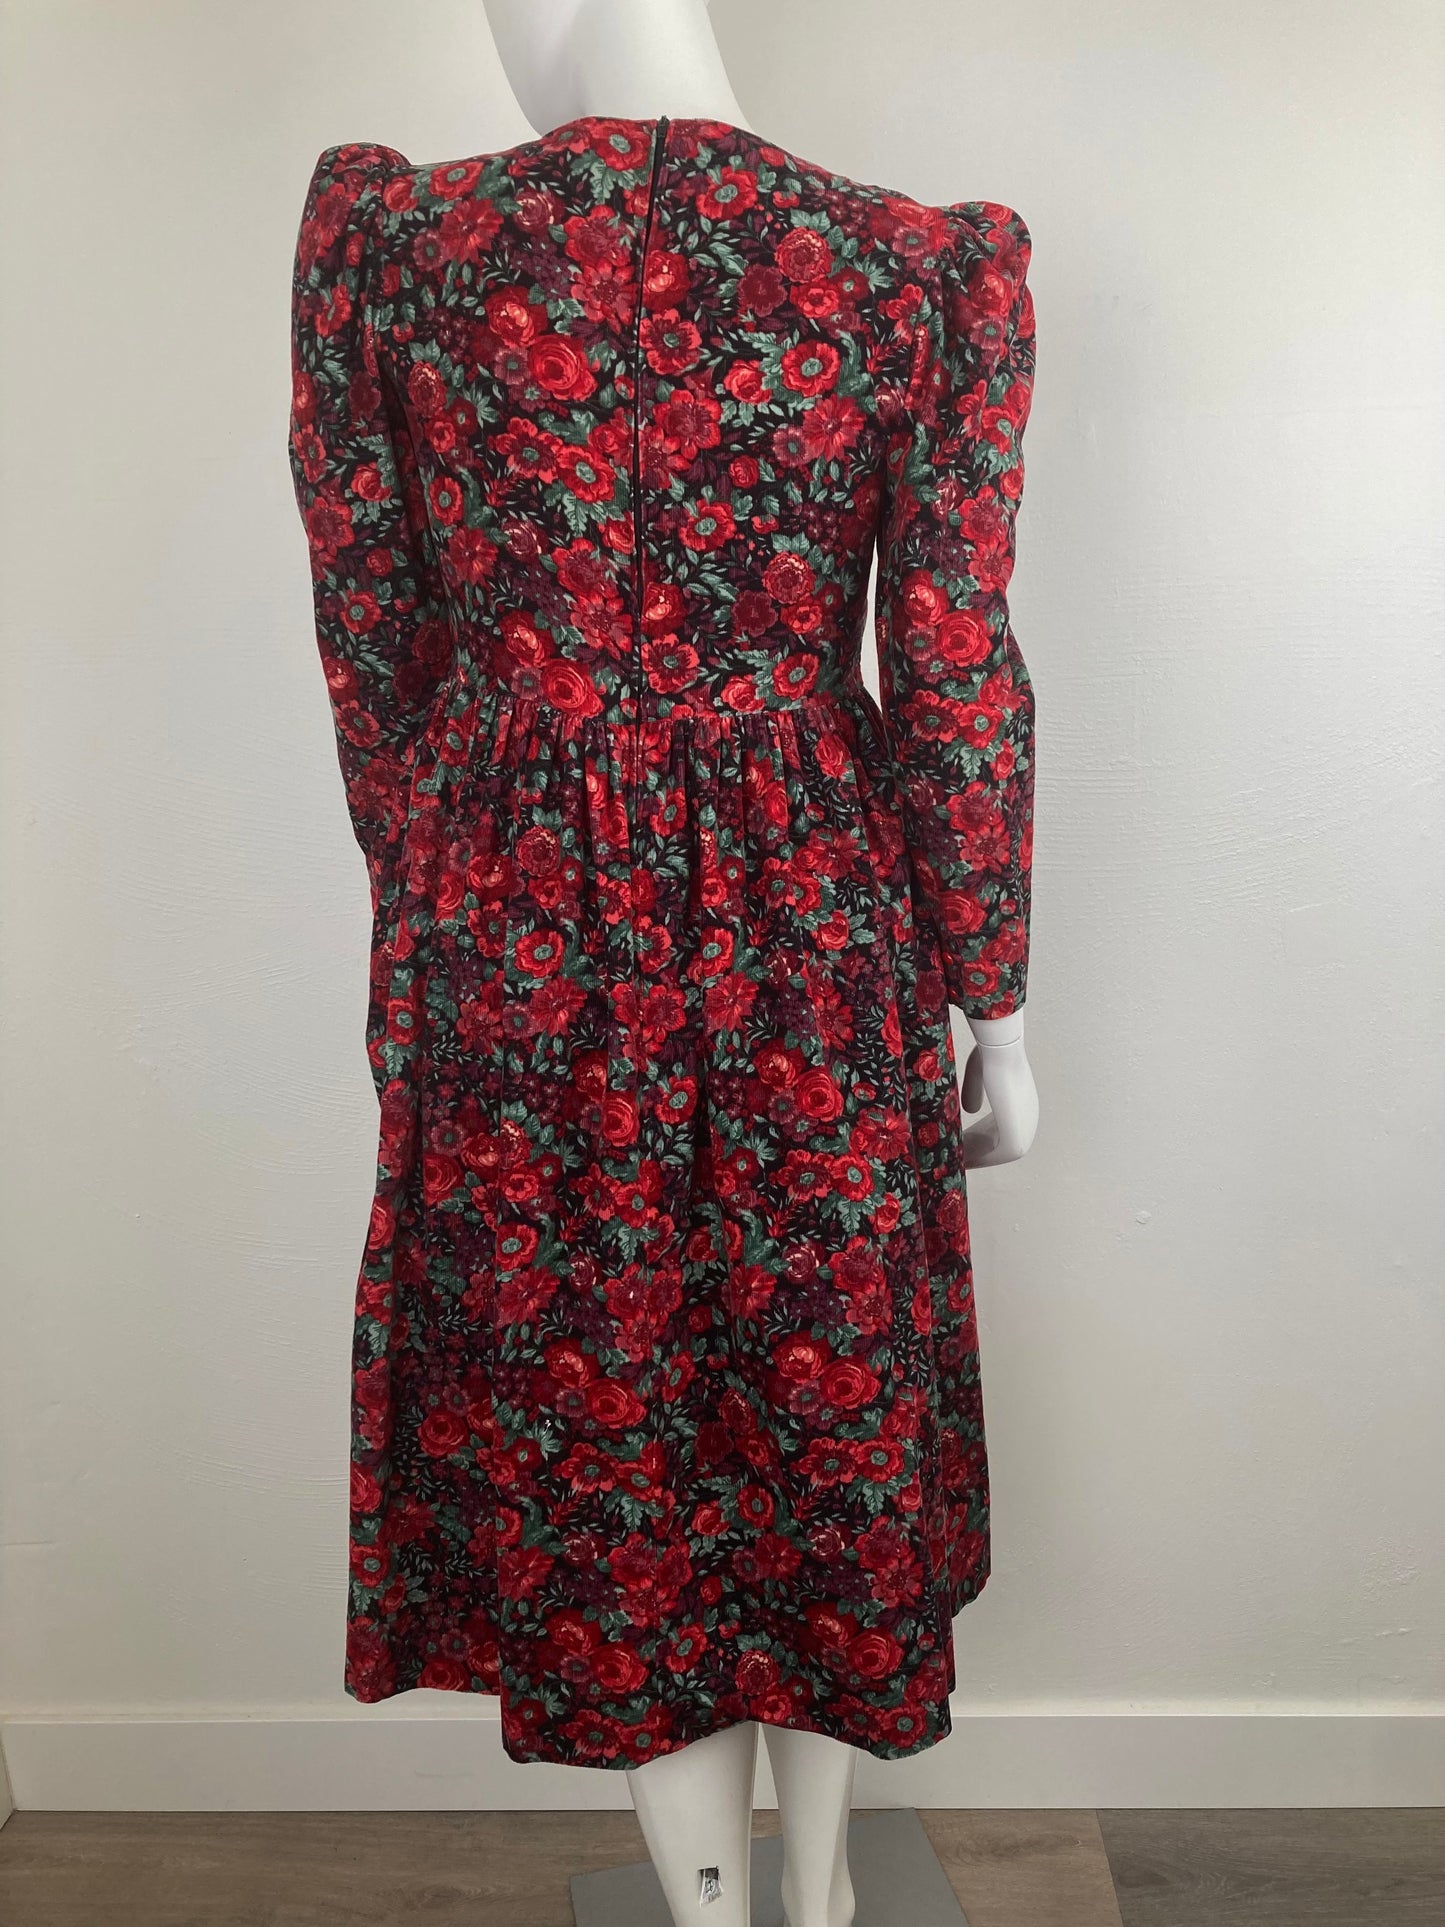 1980s Laura Ashley Printed Corduroy Dress, Size M (10)